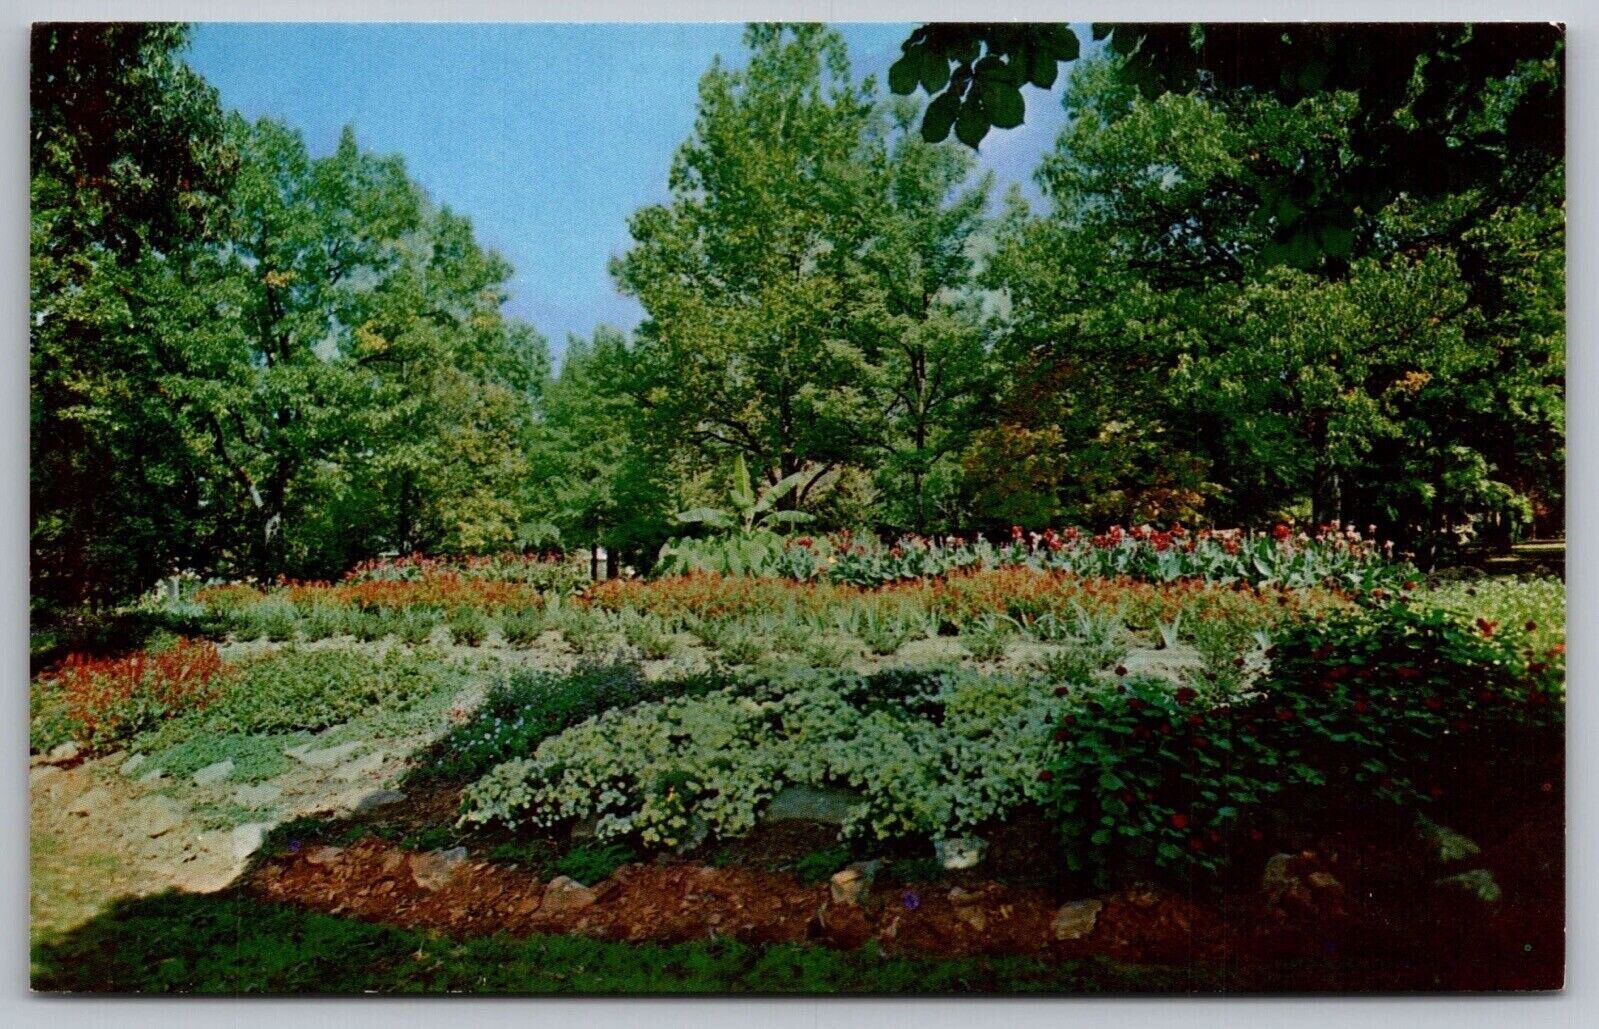 Floral Display City Park Hickory North Carolina Flower Field Vintage Postcard